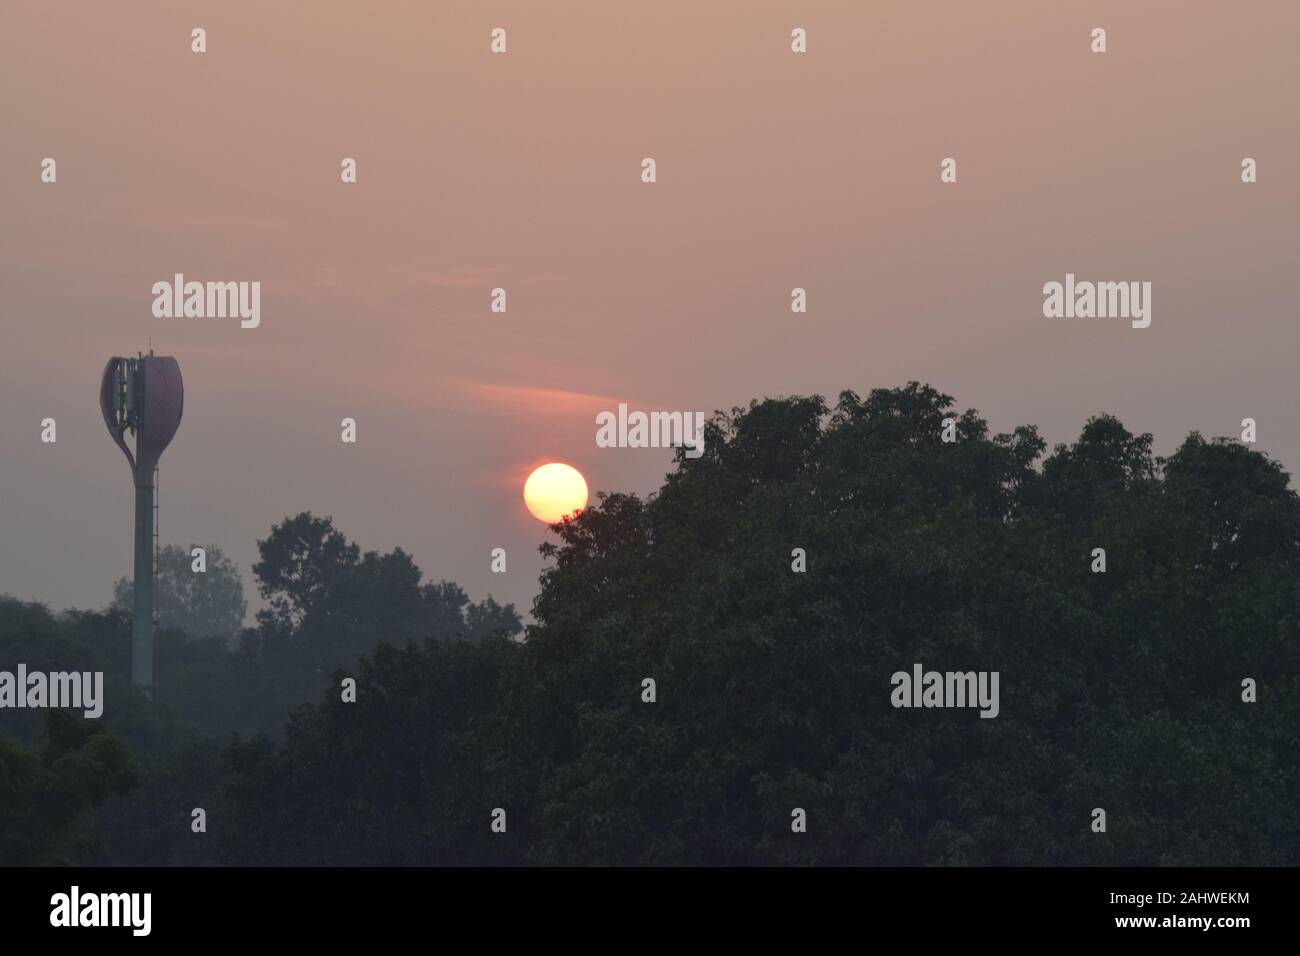 Sun hiding behind the tree, Sunset view, Chandigarh Stock Photo